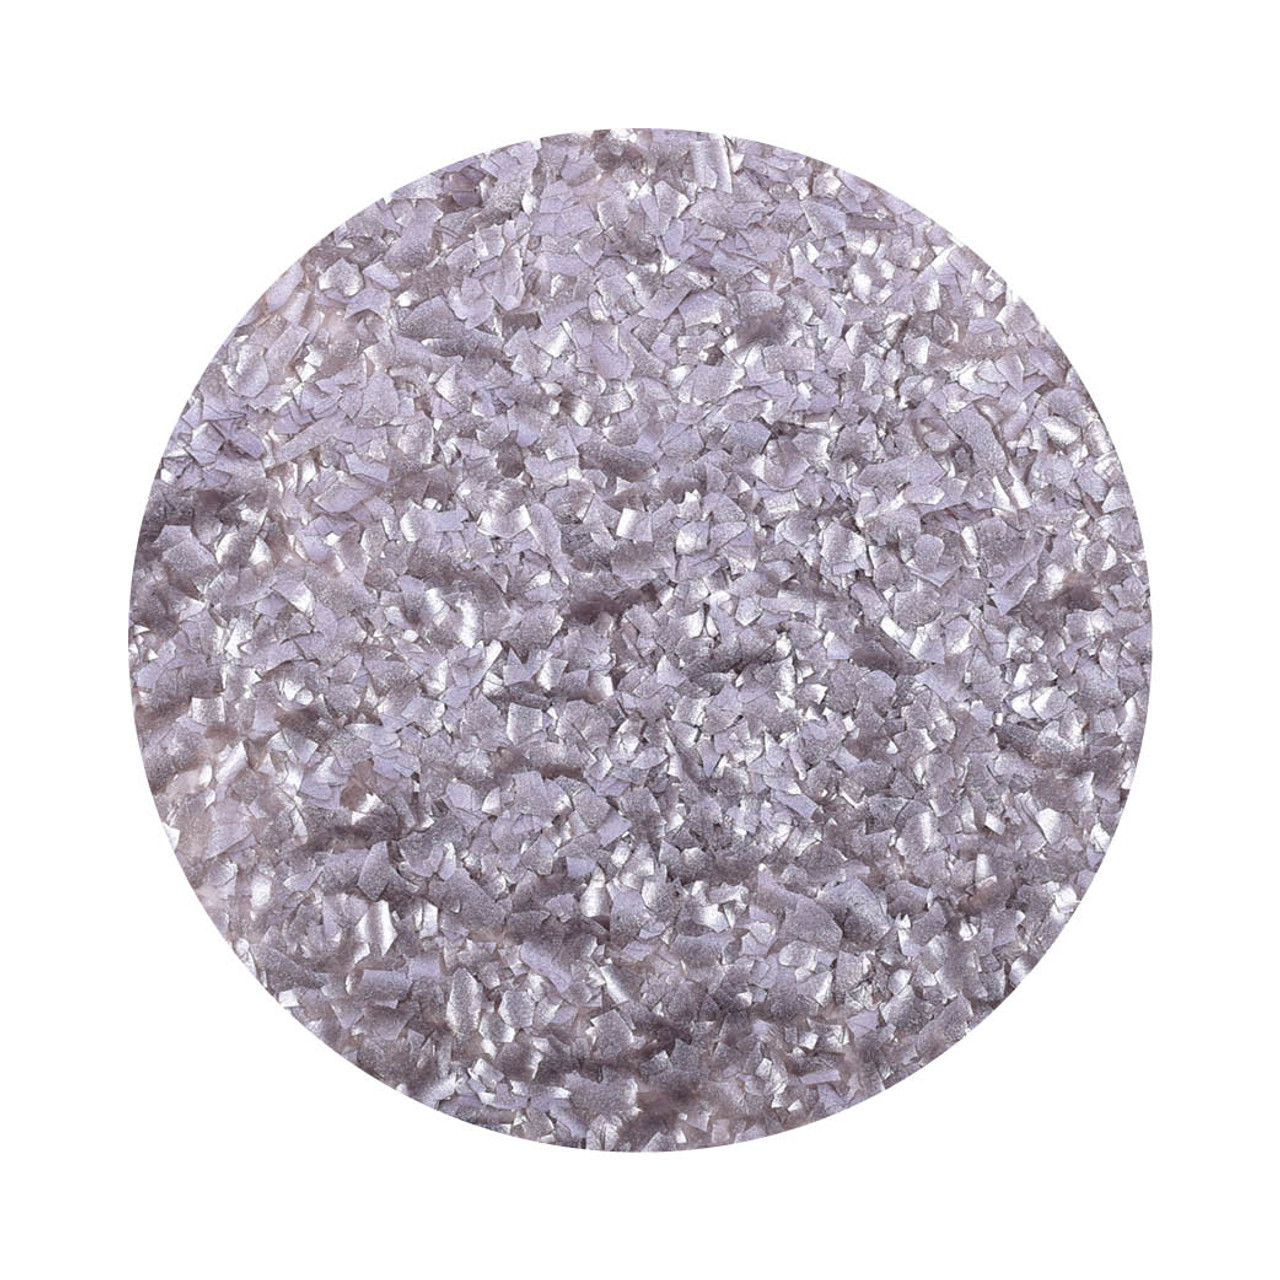 Bulk 200g -  Crafting Glitter Flakes - Silver